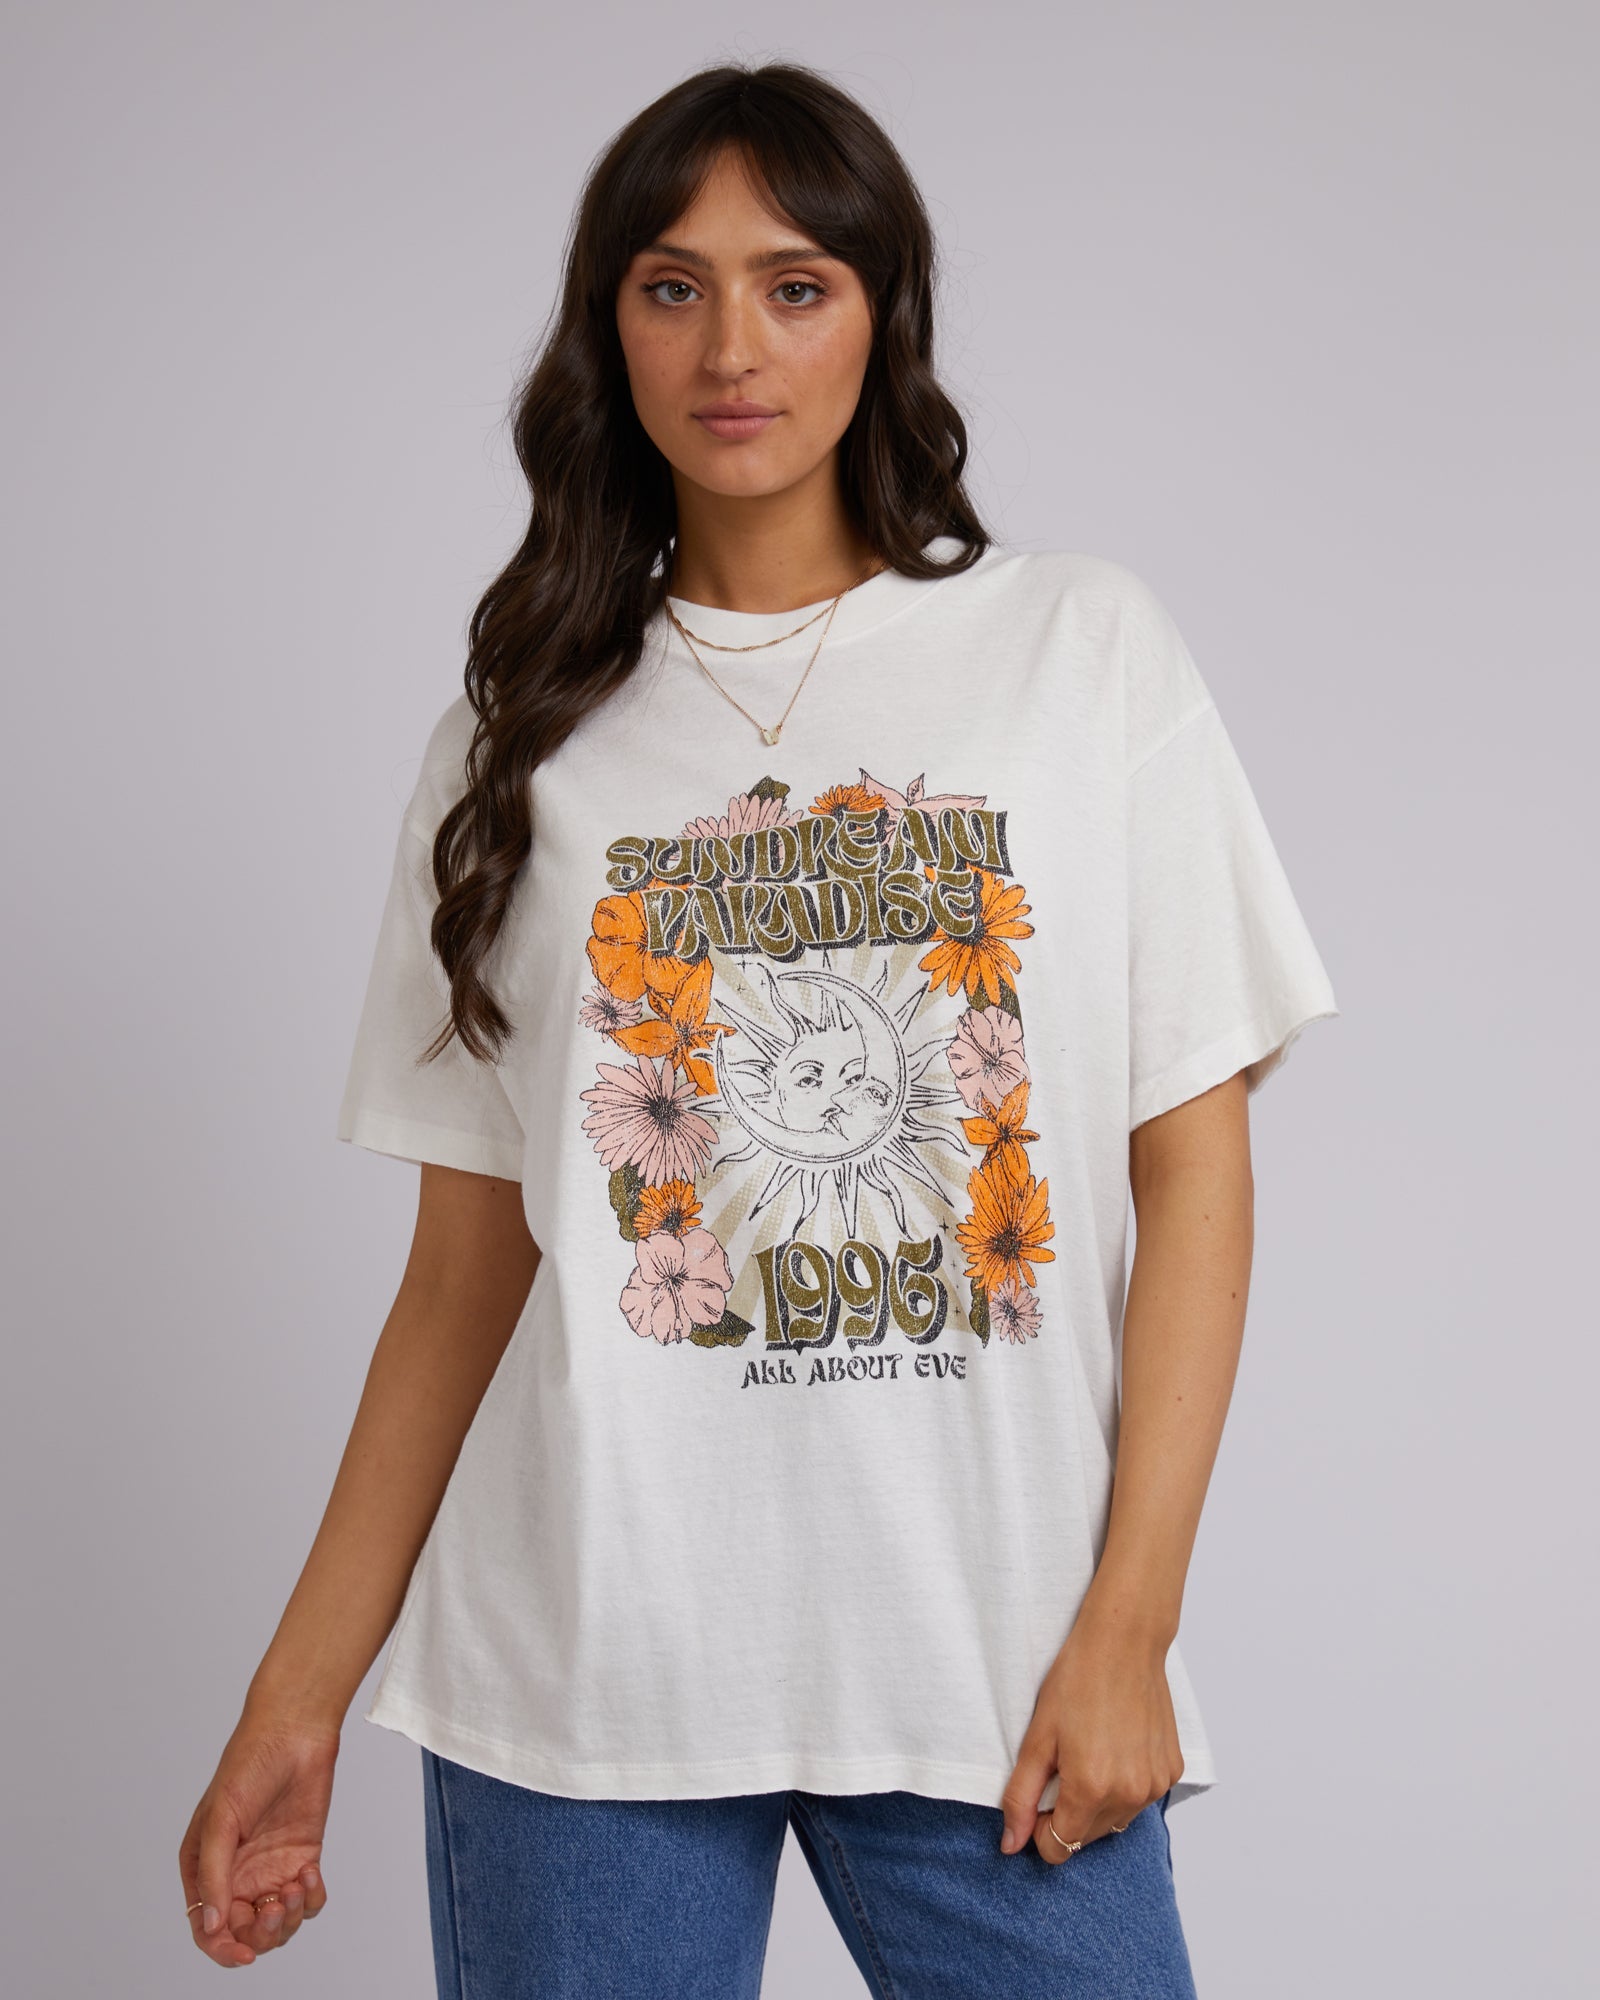 Women's T-Shirts & Tees, Shop Online